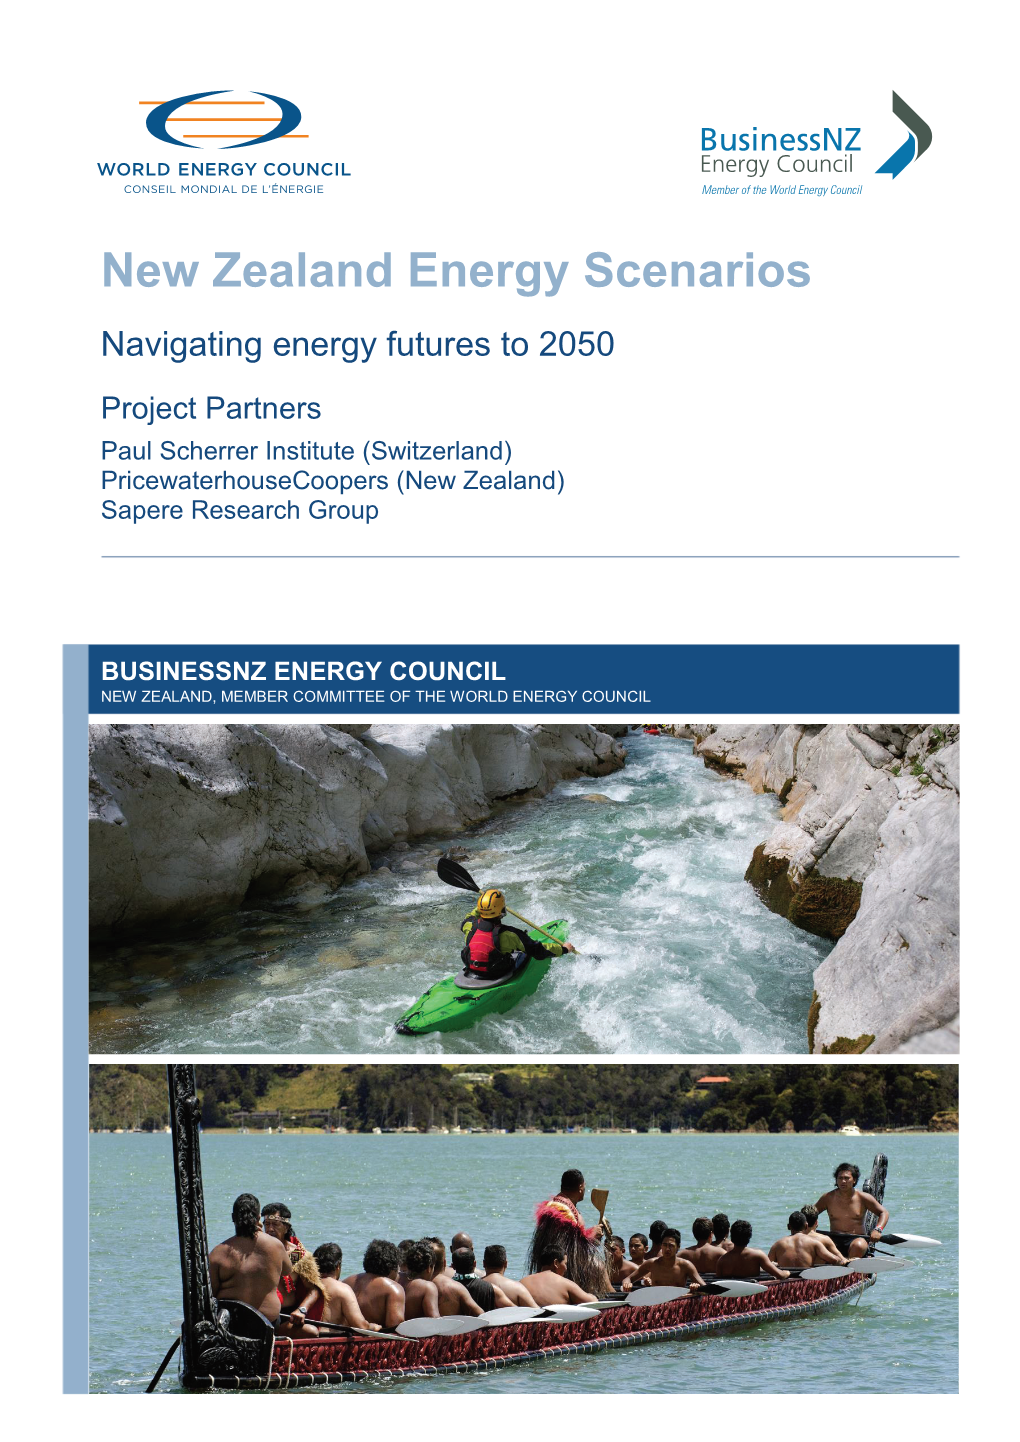 New Zealand Energy Scenarios Businessnz Energy Council, 2015 106